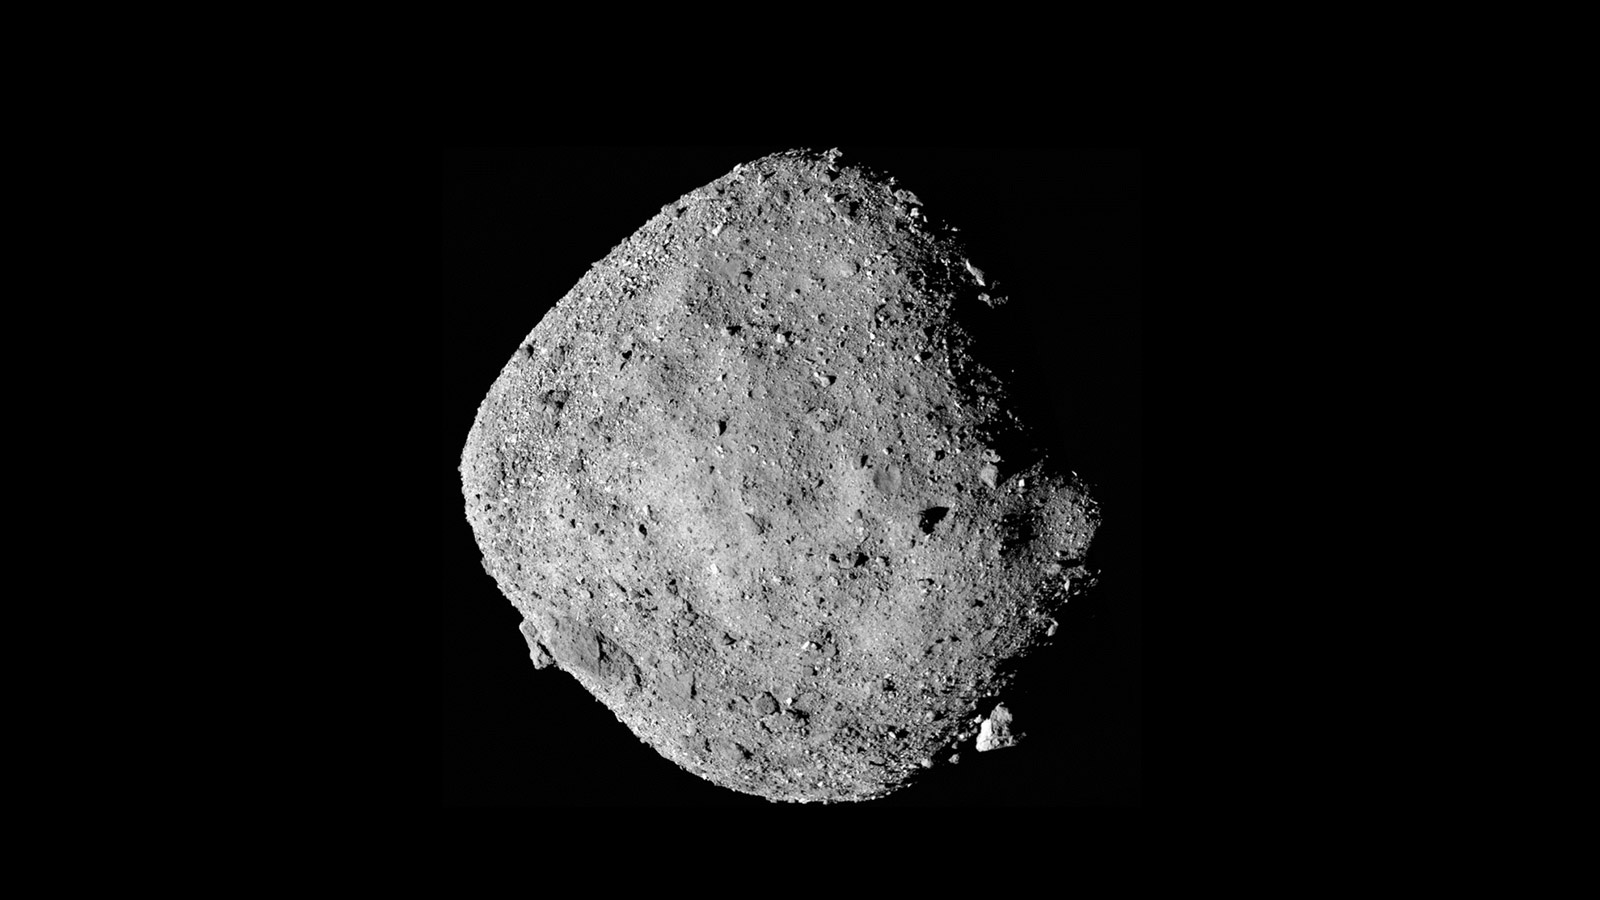 NASA Prepares for OSIRIS-REx's Return by Transporting a Mock Asteroid Sample